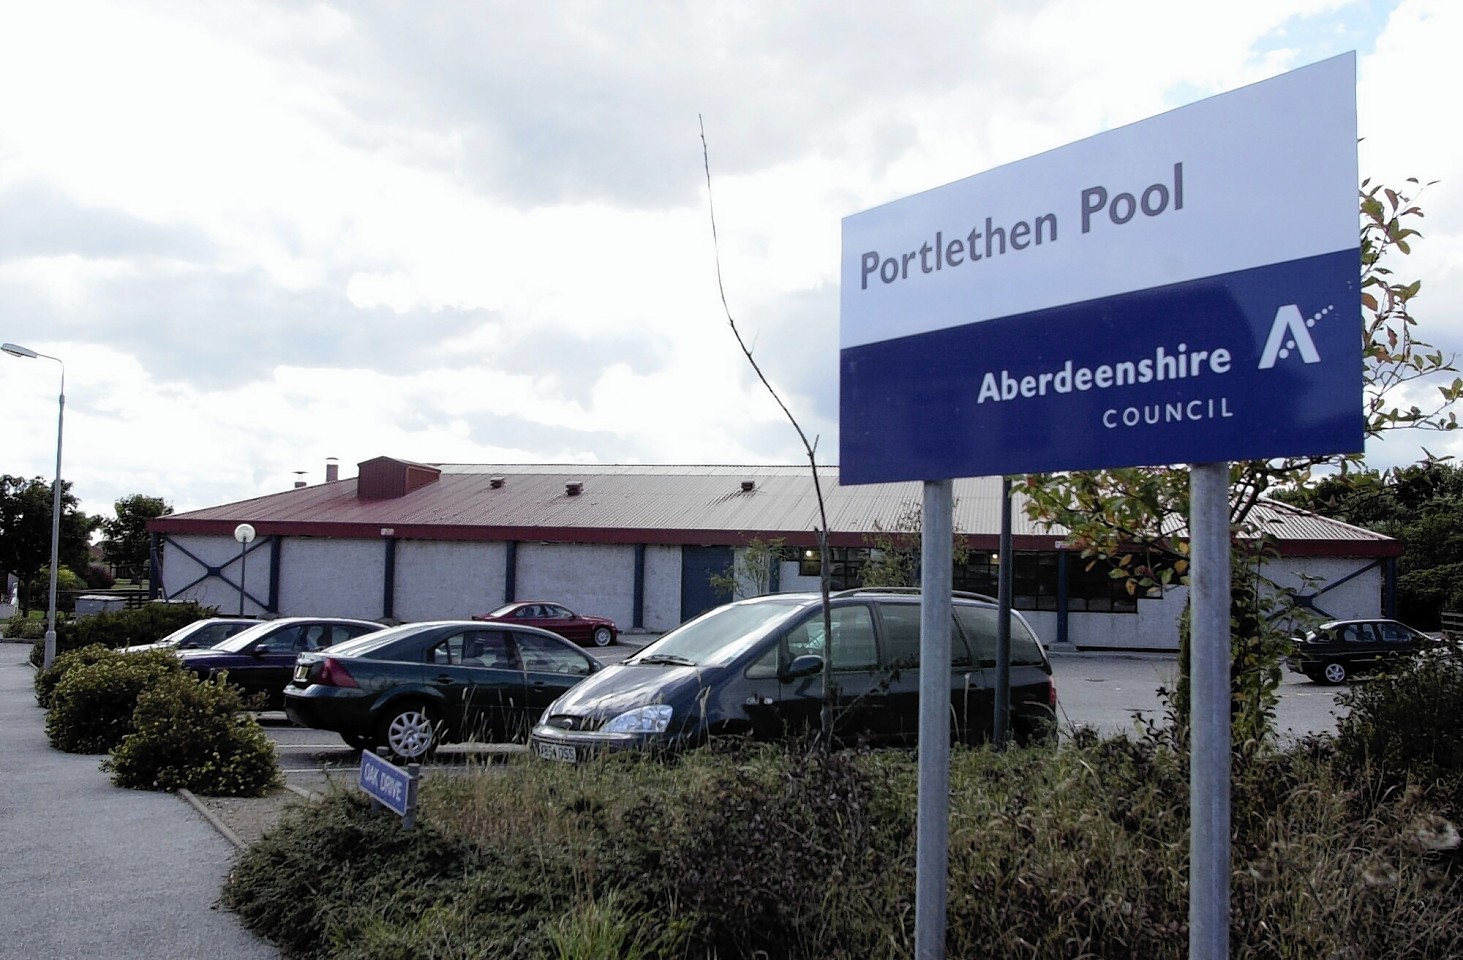 Portlethen Swimming Pool